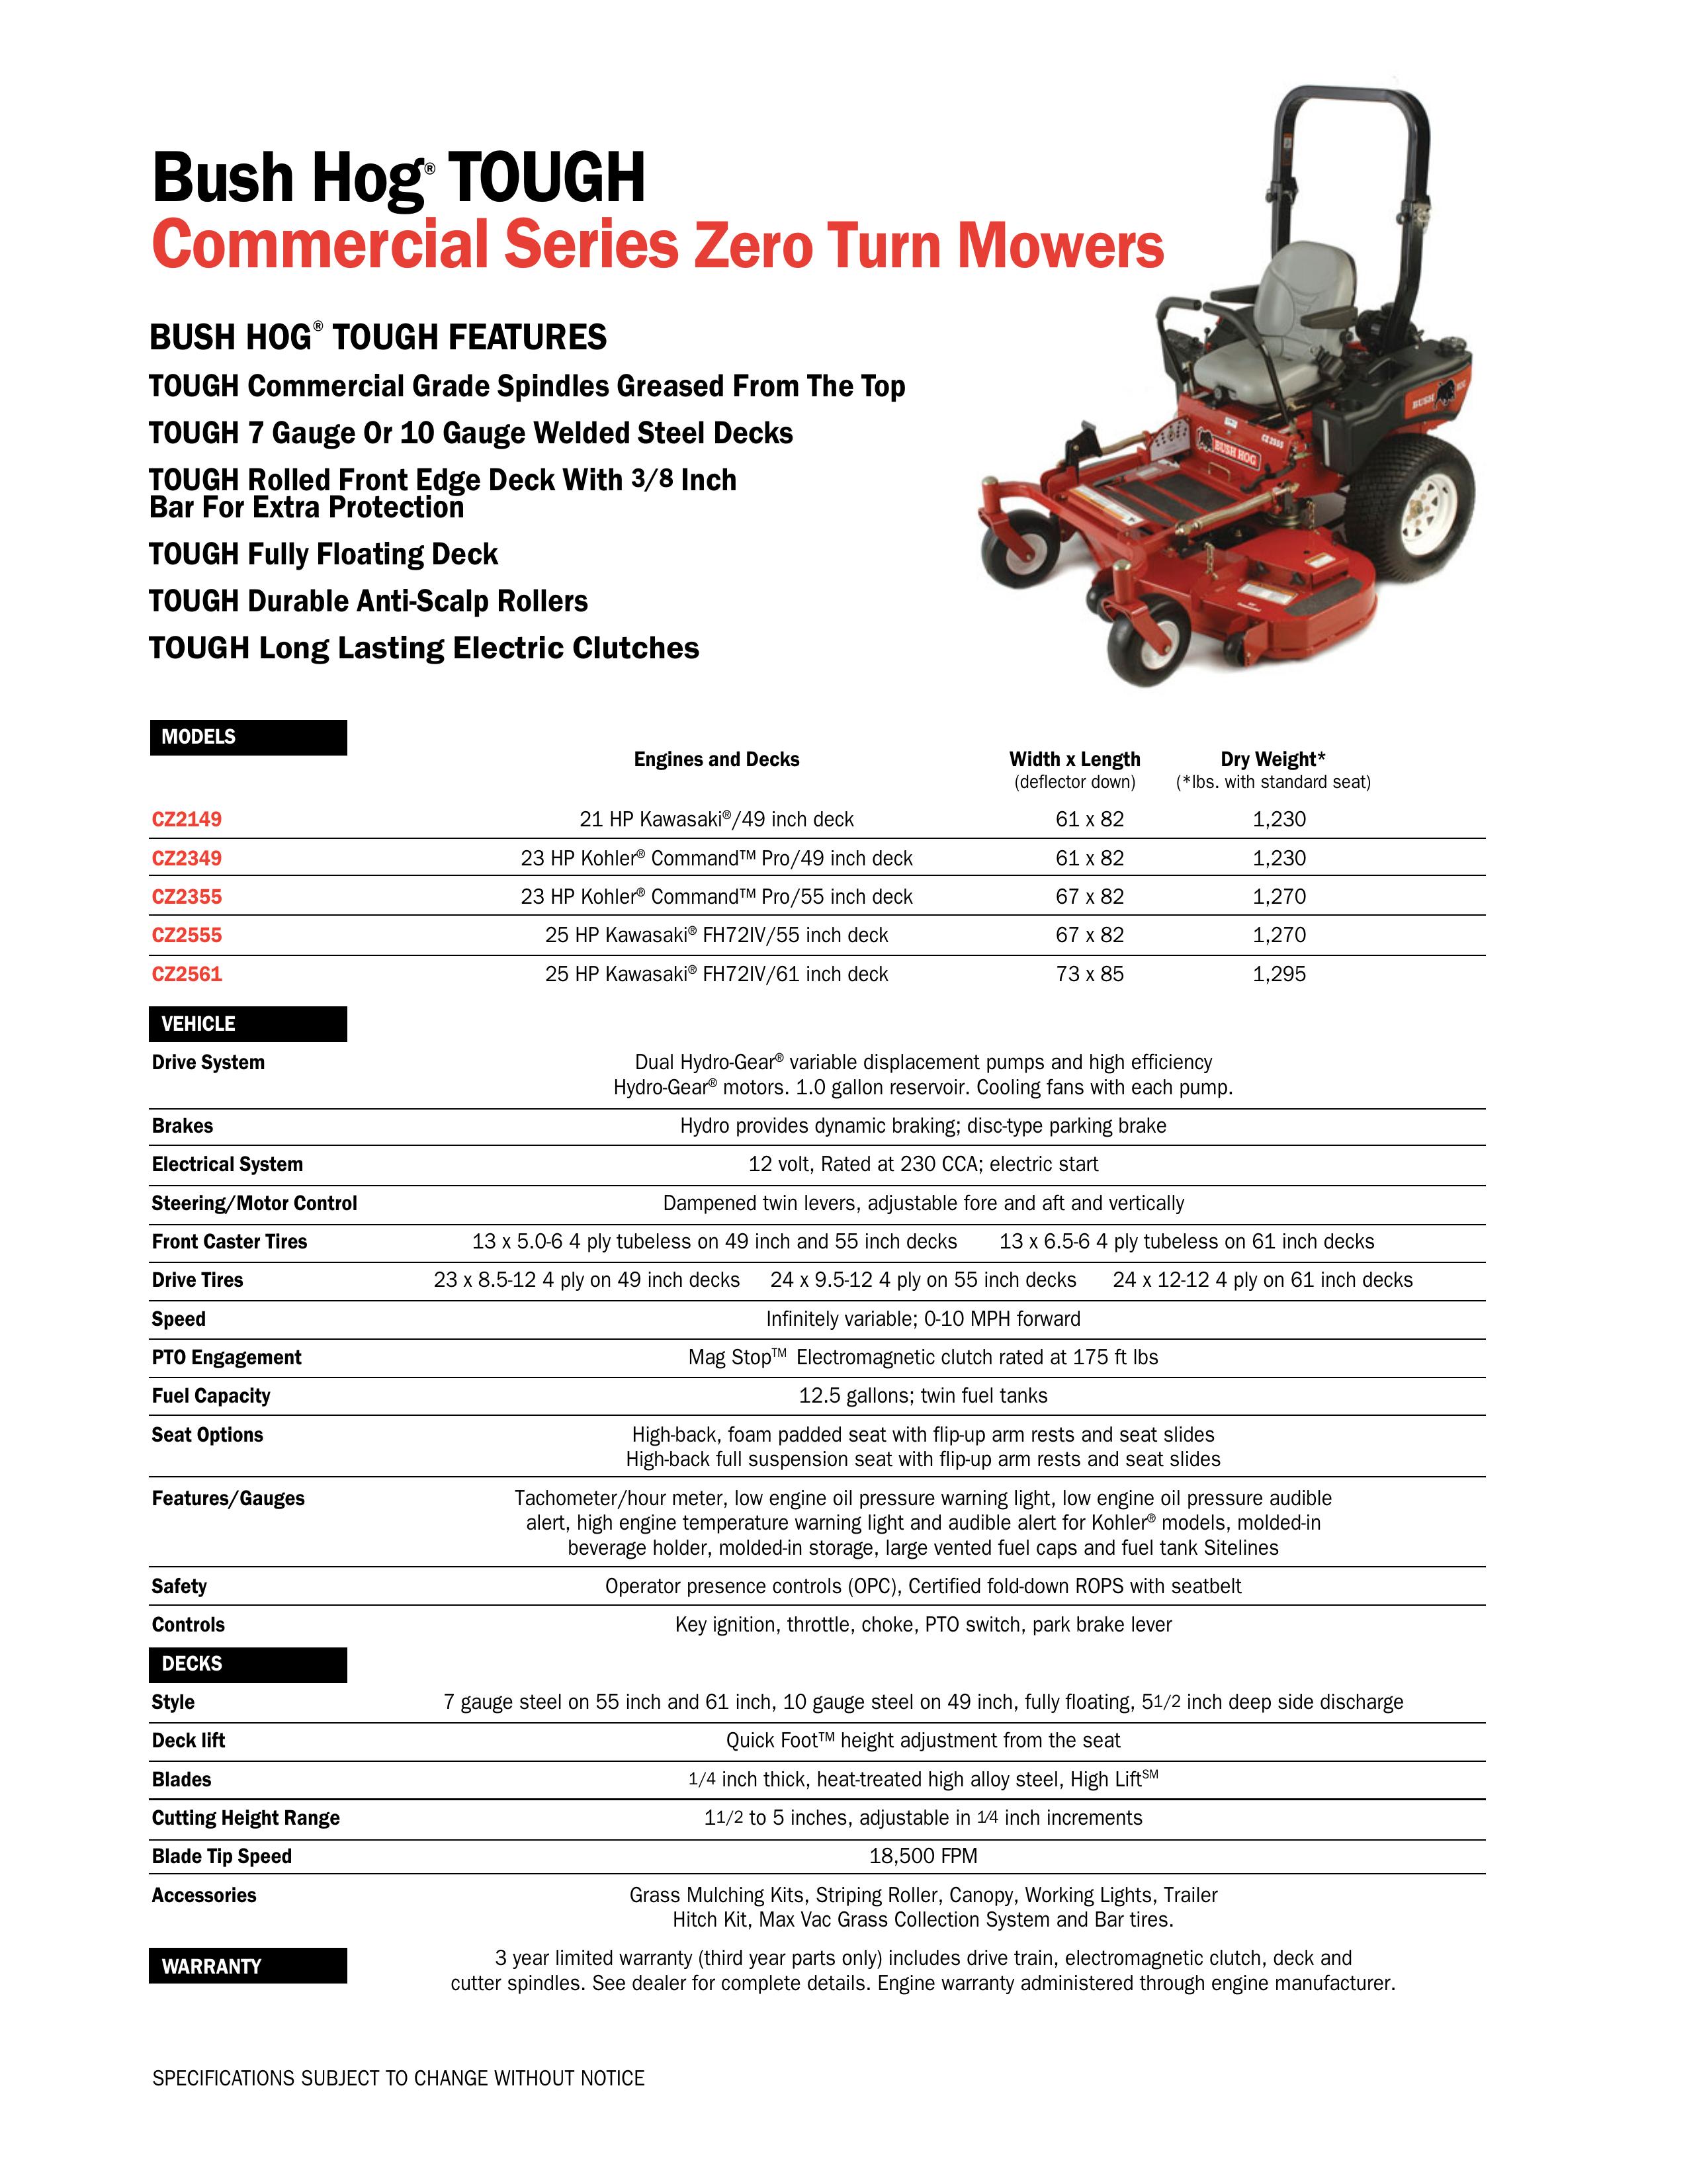 Bush Hog CZ2349 Lawn Mower User Manual